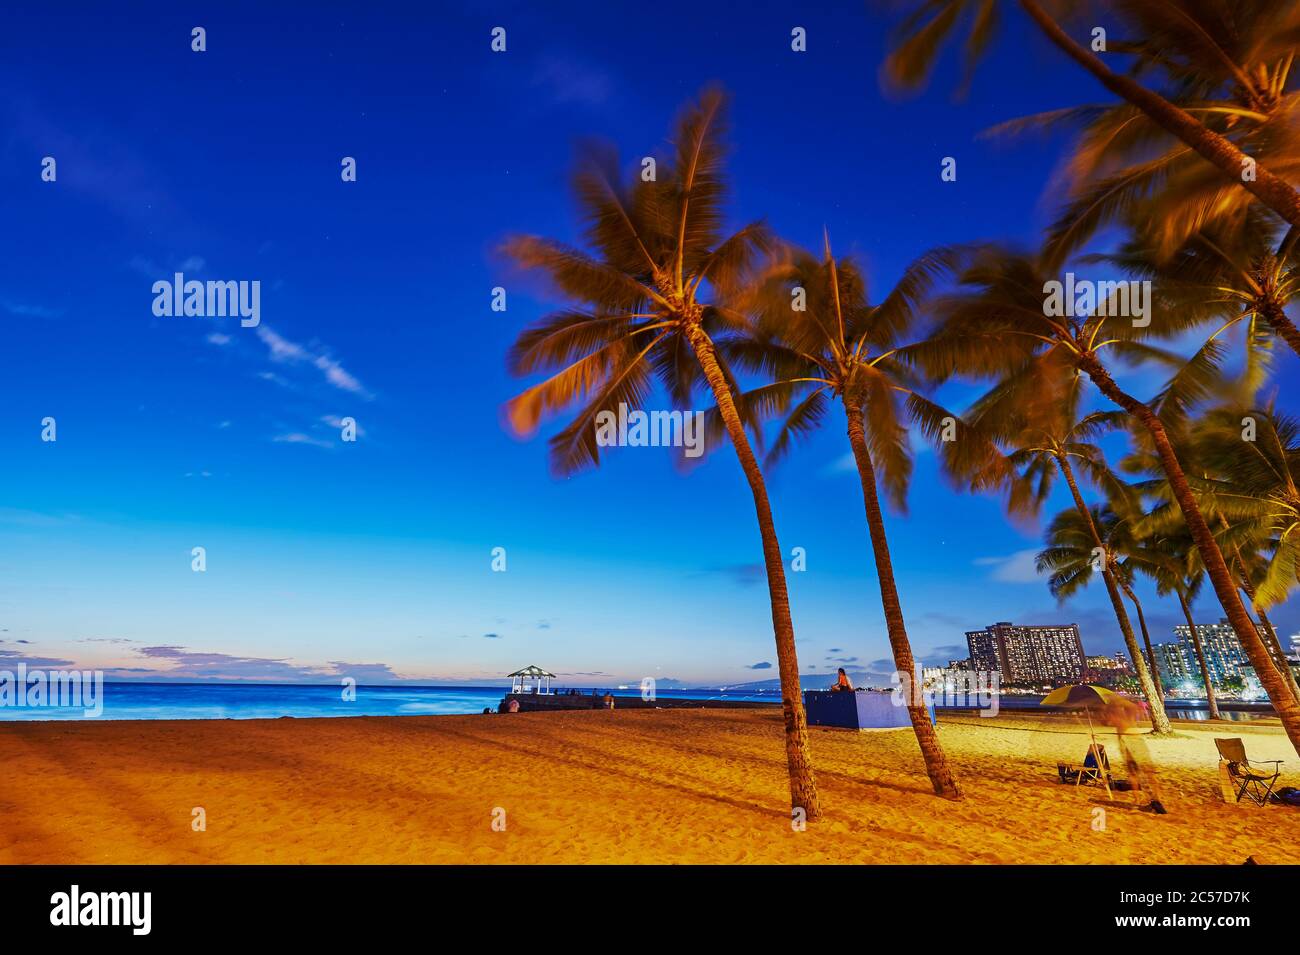 Kokospalmen oder Kokospalmen (Cocos nucifera) bei Sonnenuntergang, K?hallo? Strand, Honolulu Honolulu, Hawaii, Usa Stockfoto